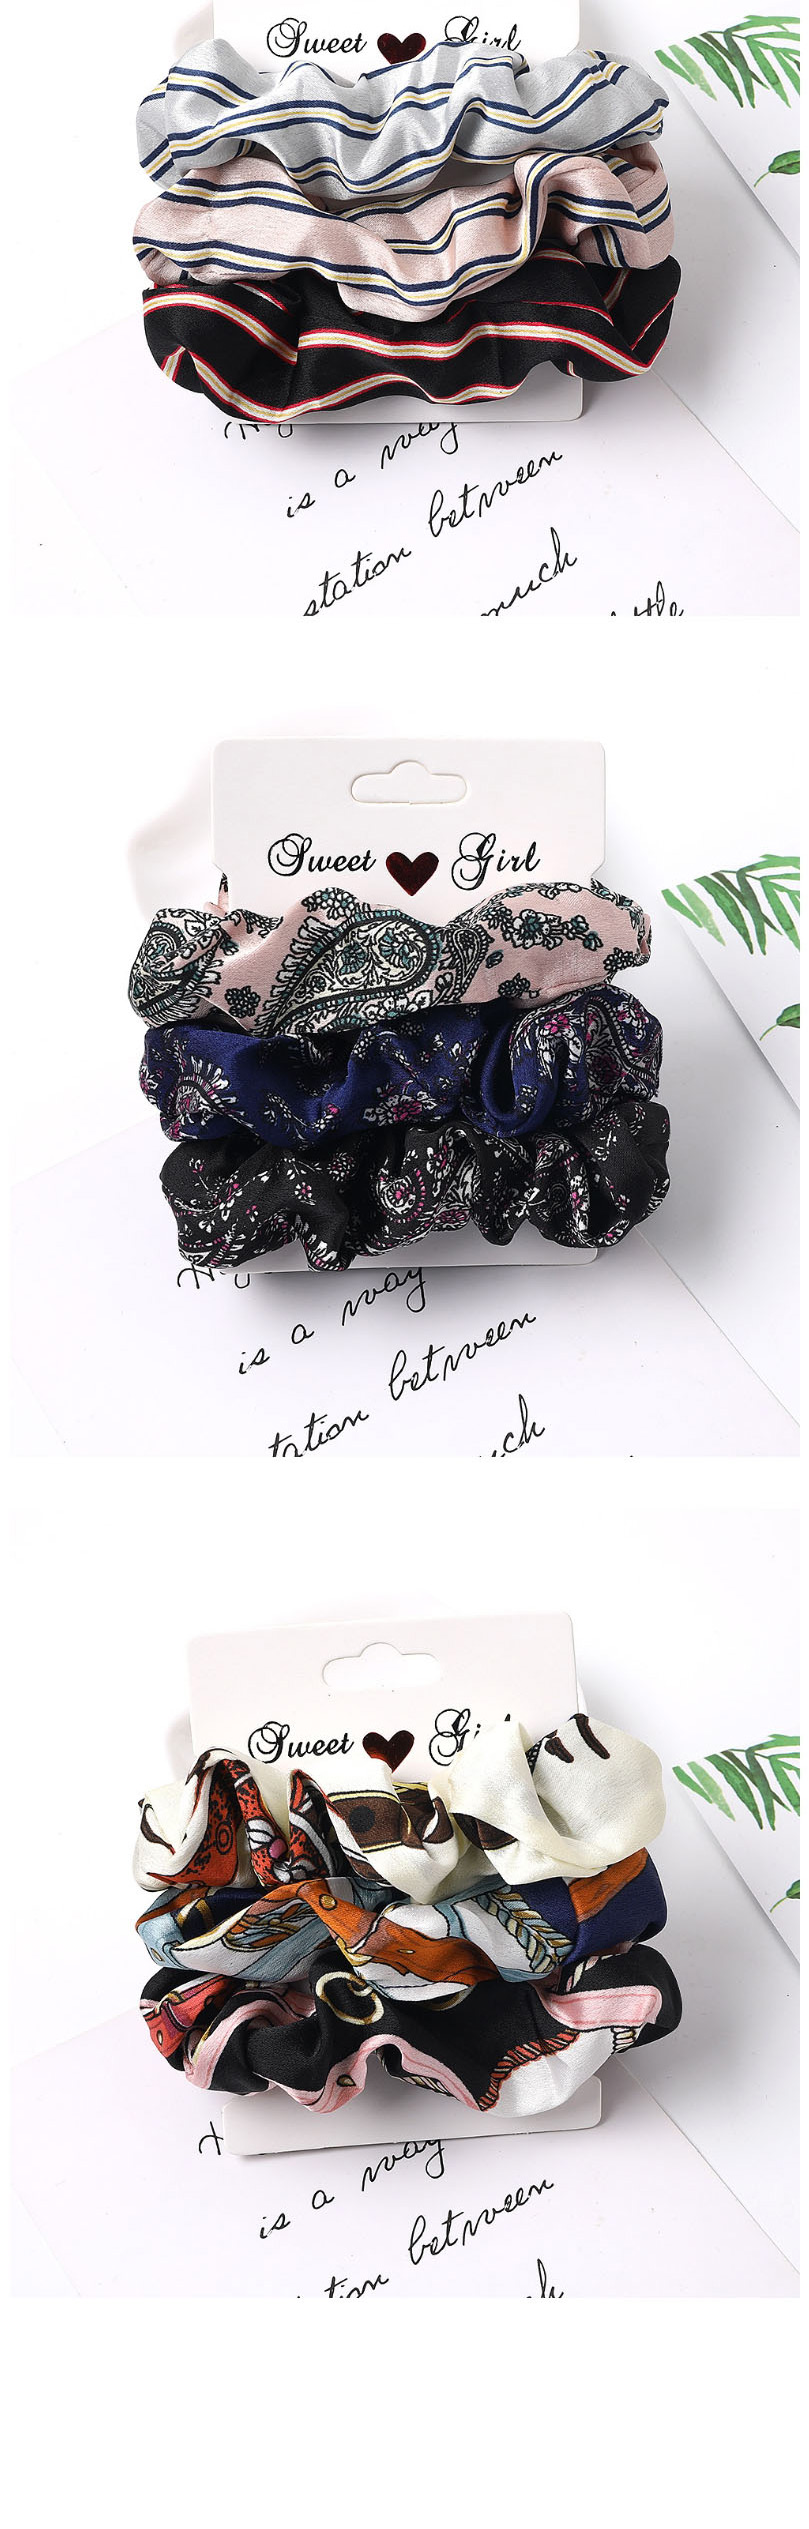 Fashion Pink Champagne Black Crystal Forged Fabric Chiffon Small Bowel Hair Rope Set,Hair Ring